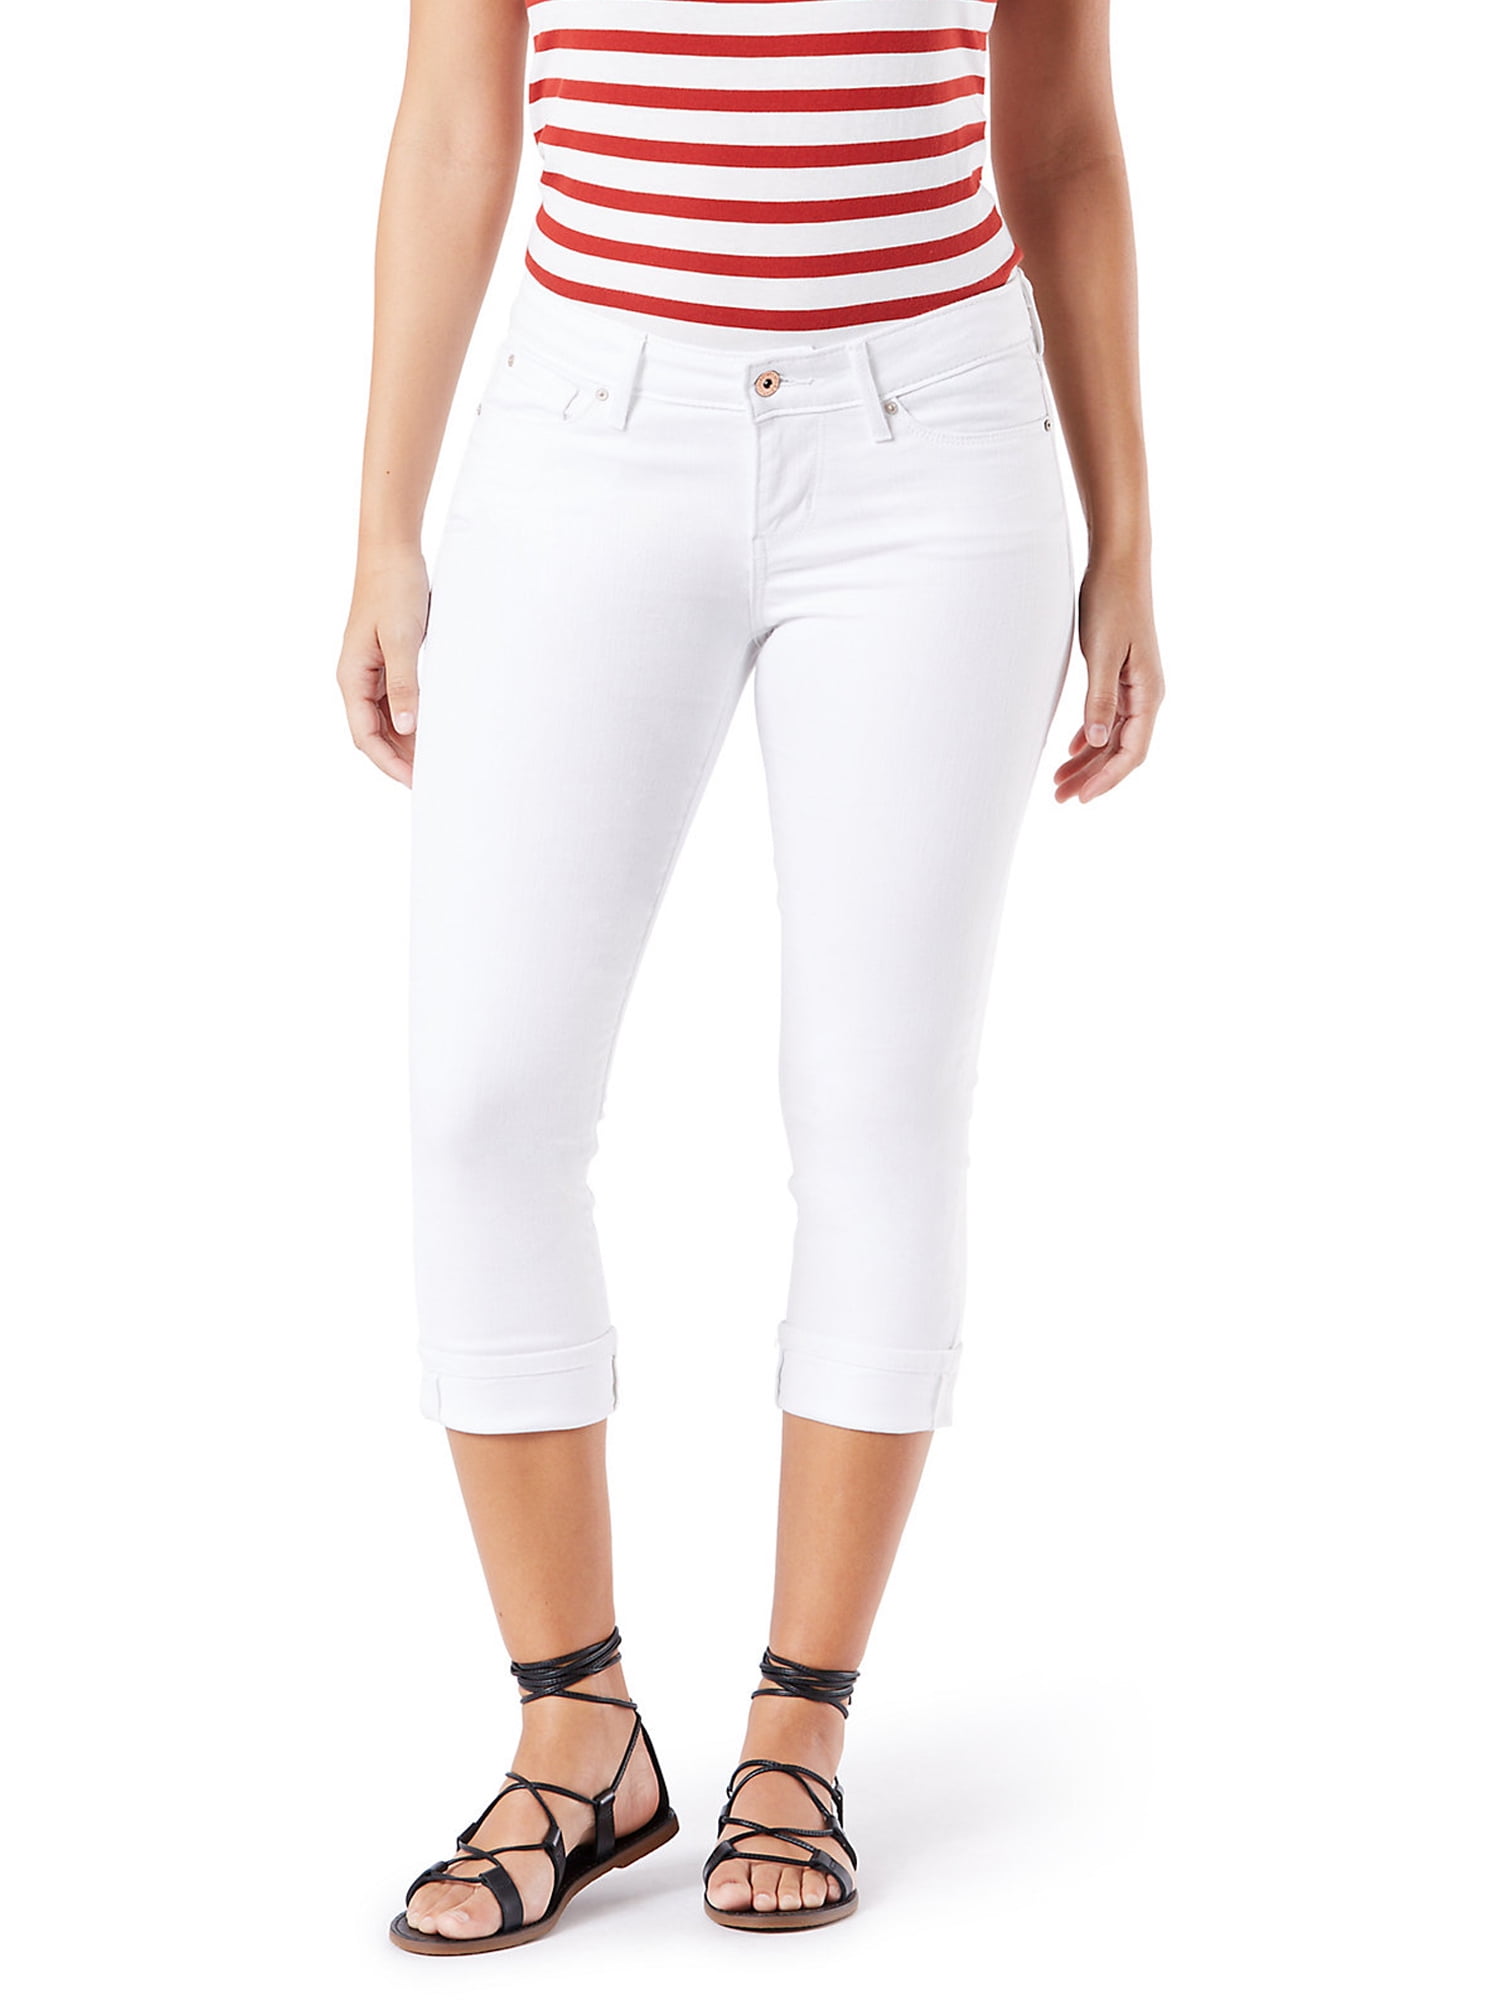 Introducir 48+ imagen levi’s white capri jeans